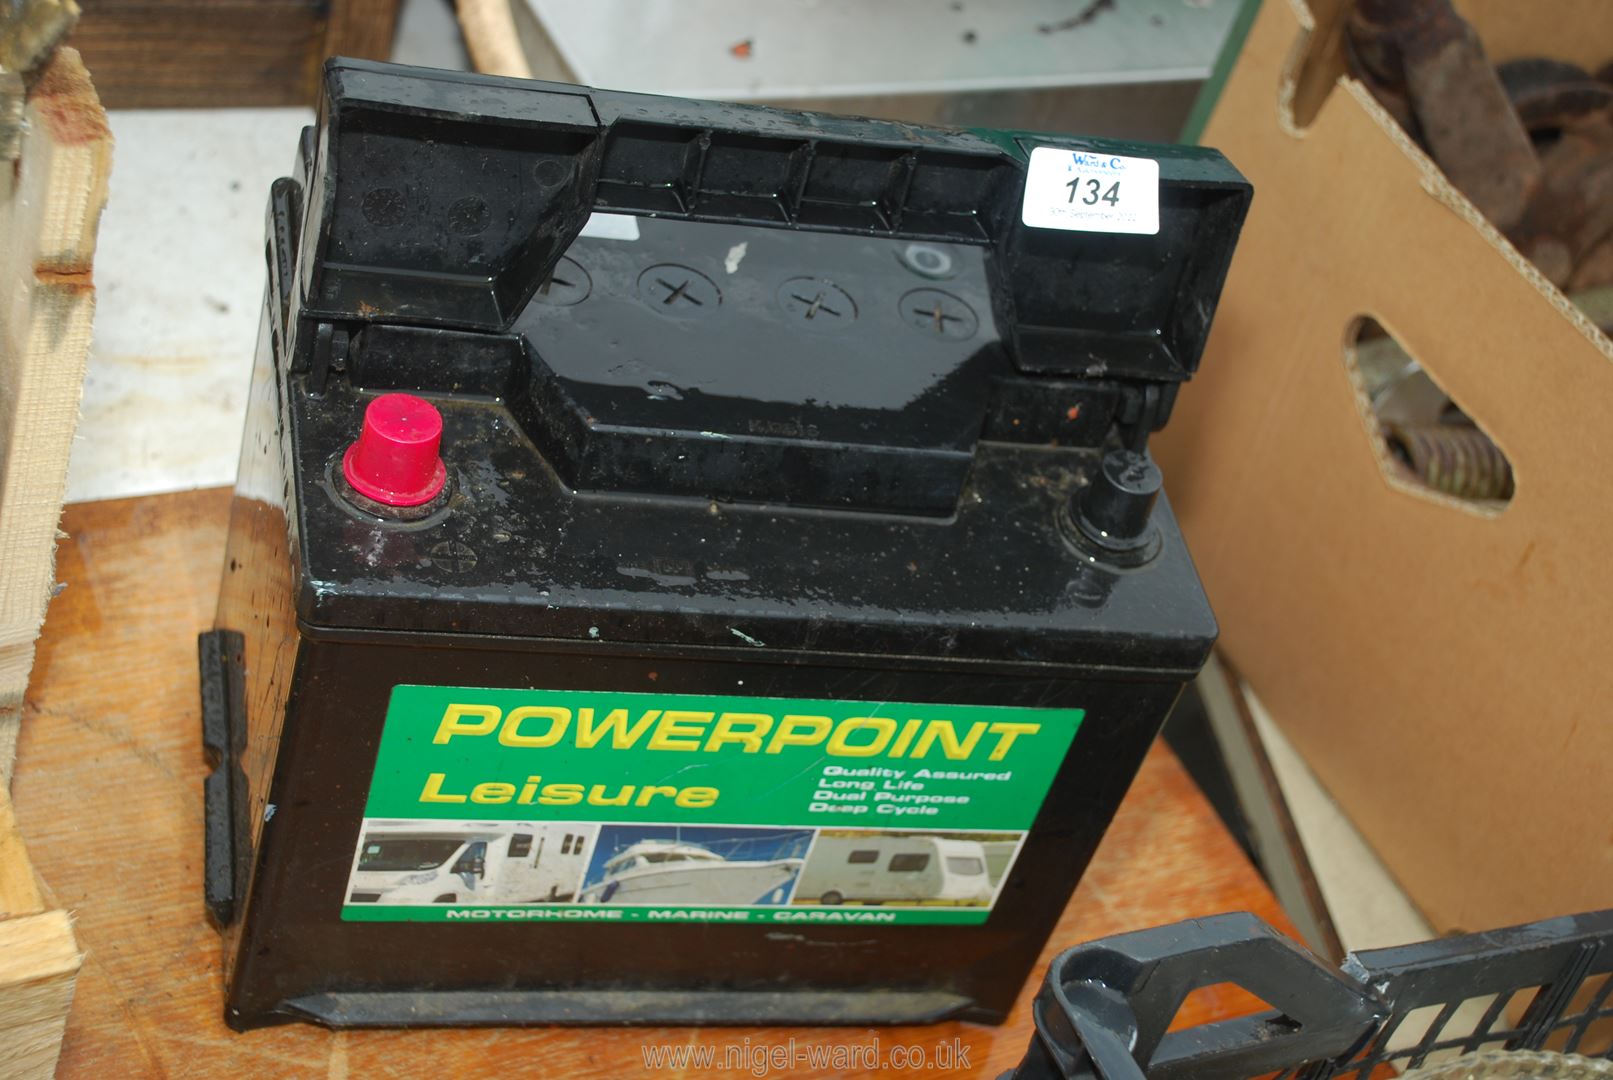 A Power Point Leisure 12 volt battery.